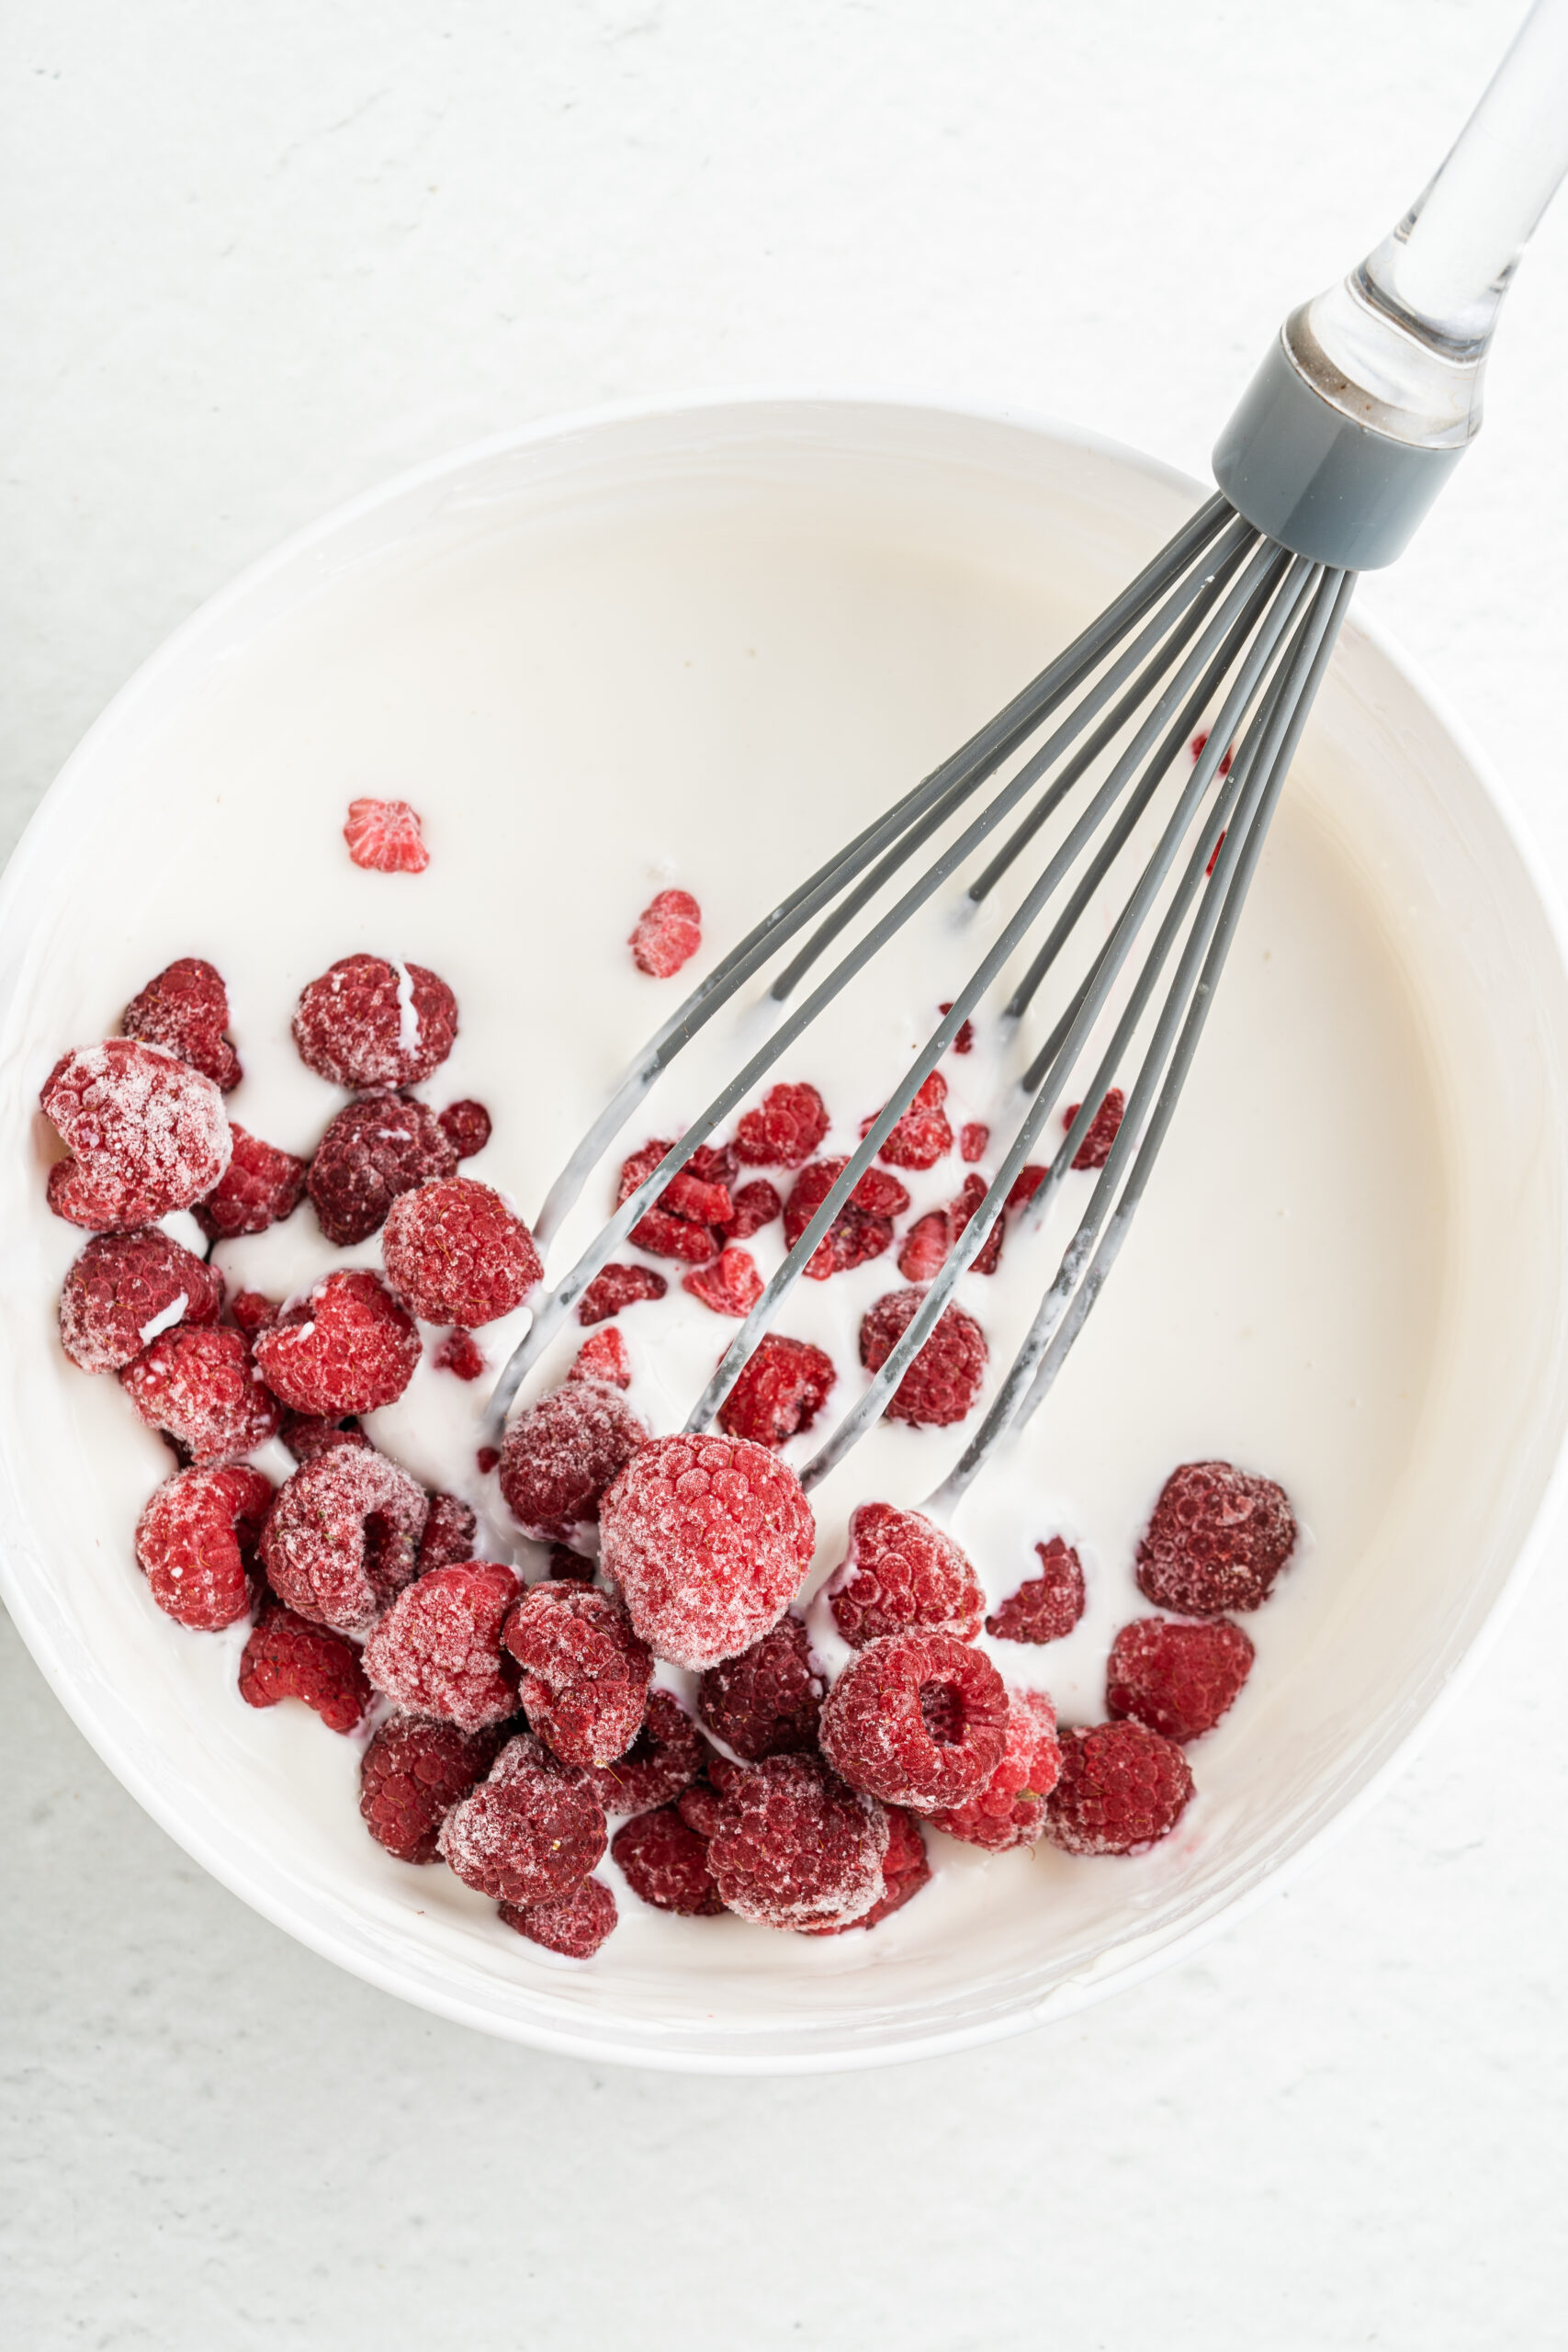 Adding raspberries to yogurt mixture in mixing bowl.